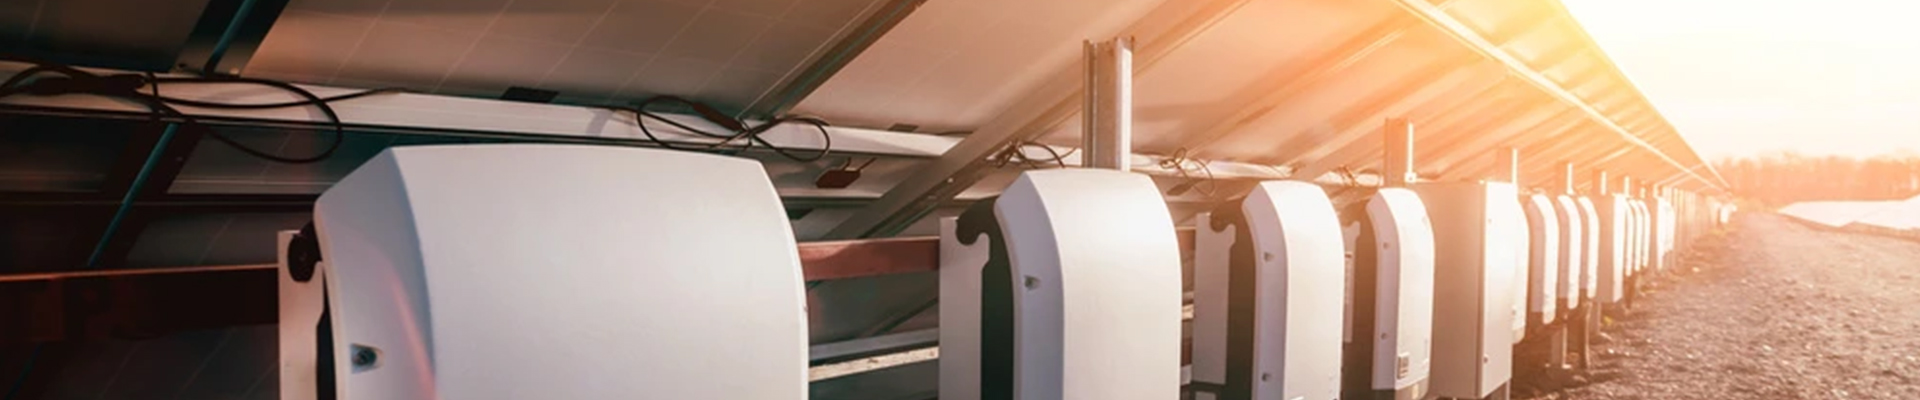 Reliable Solar Inverter In Garage